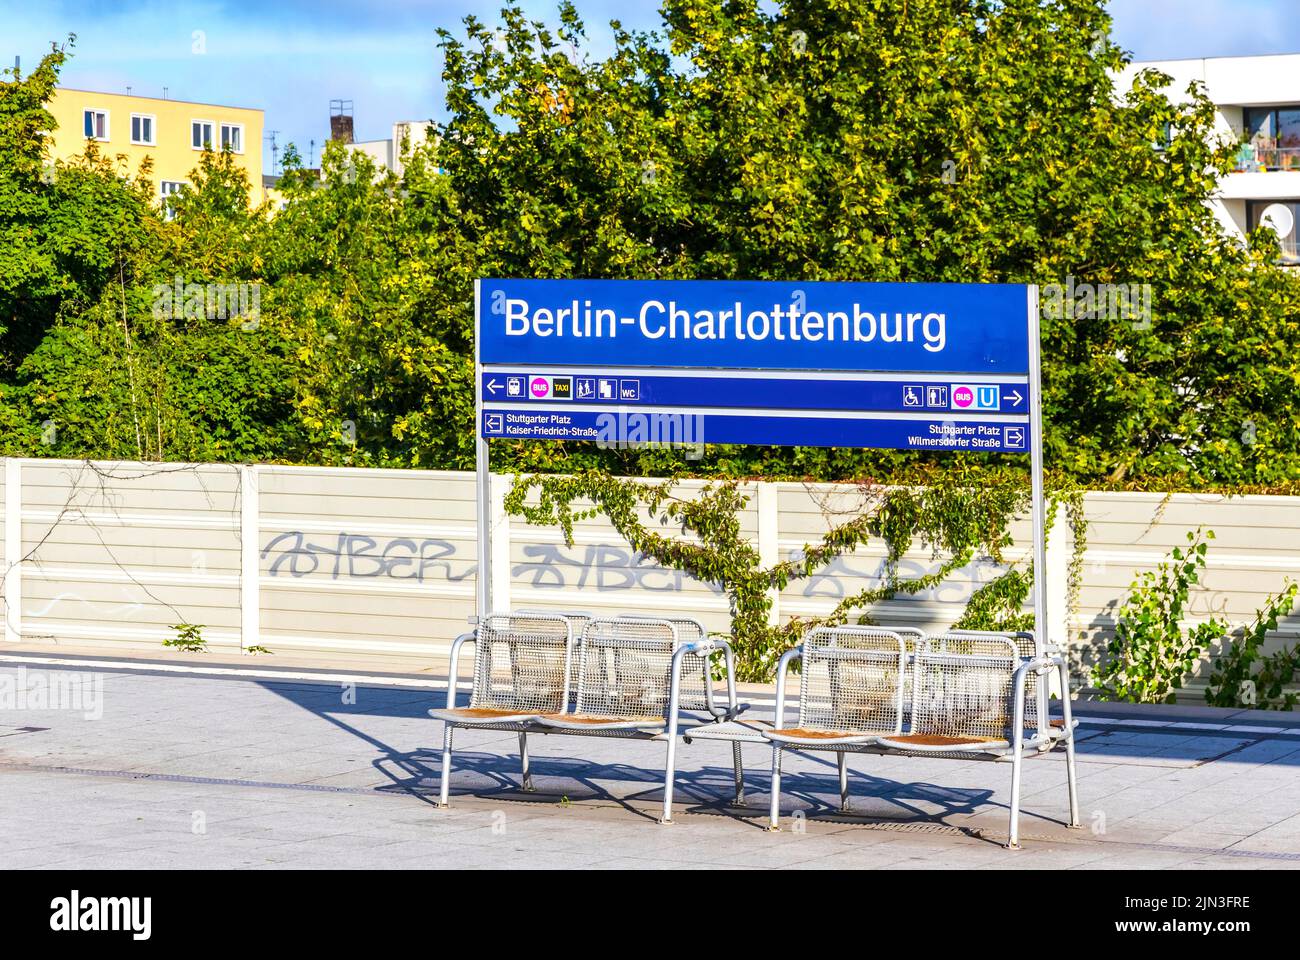 Berlin, Germany - September 15, 2019: Berlin-Charlottenburg stop sign ot the platform of S-Bahn railway station in Charlottenburg district of Berlin Stock Photo